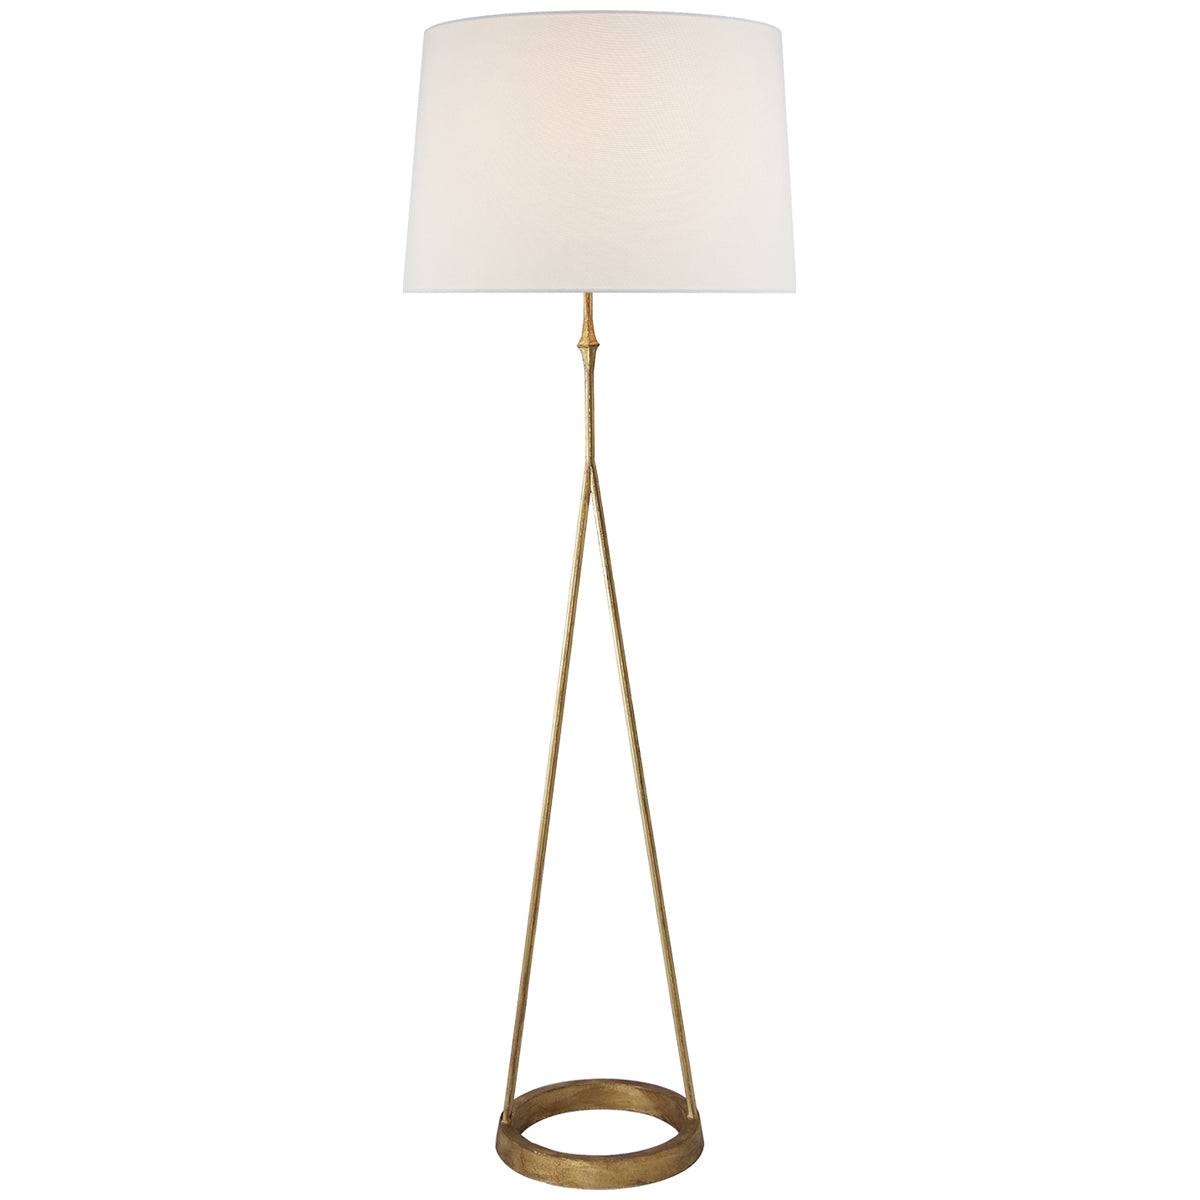 Visual Comfort Dauphine Floor Lamp with Linen Shade